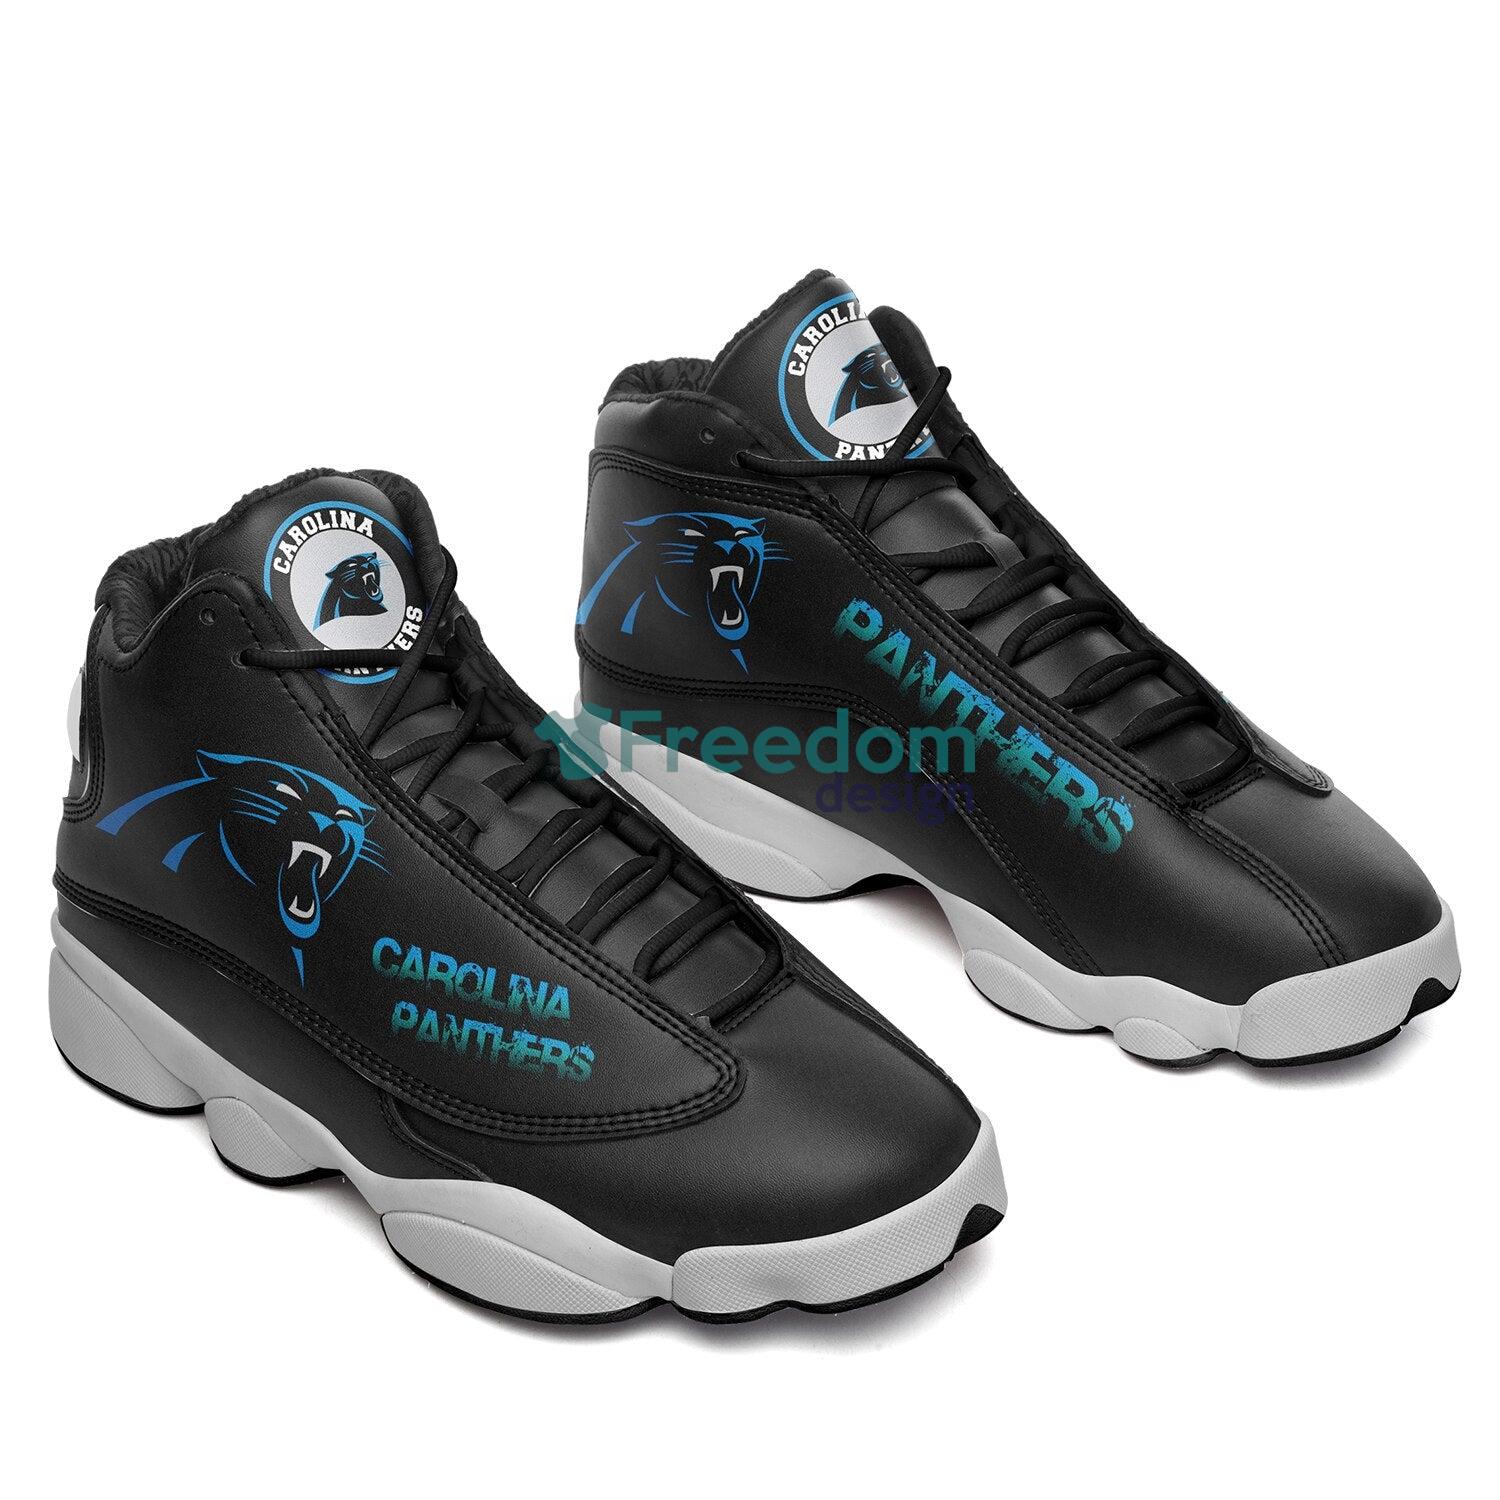 Cool Dallas Cowboys Custo Name Air Jordan 13 Shoes For Fans